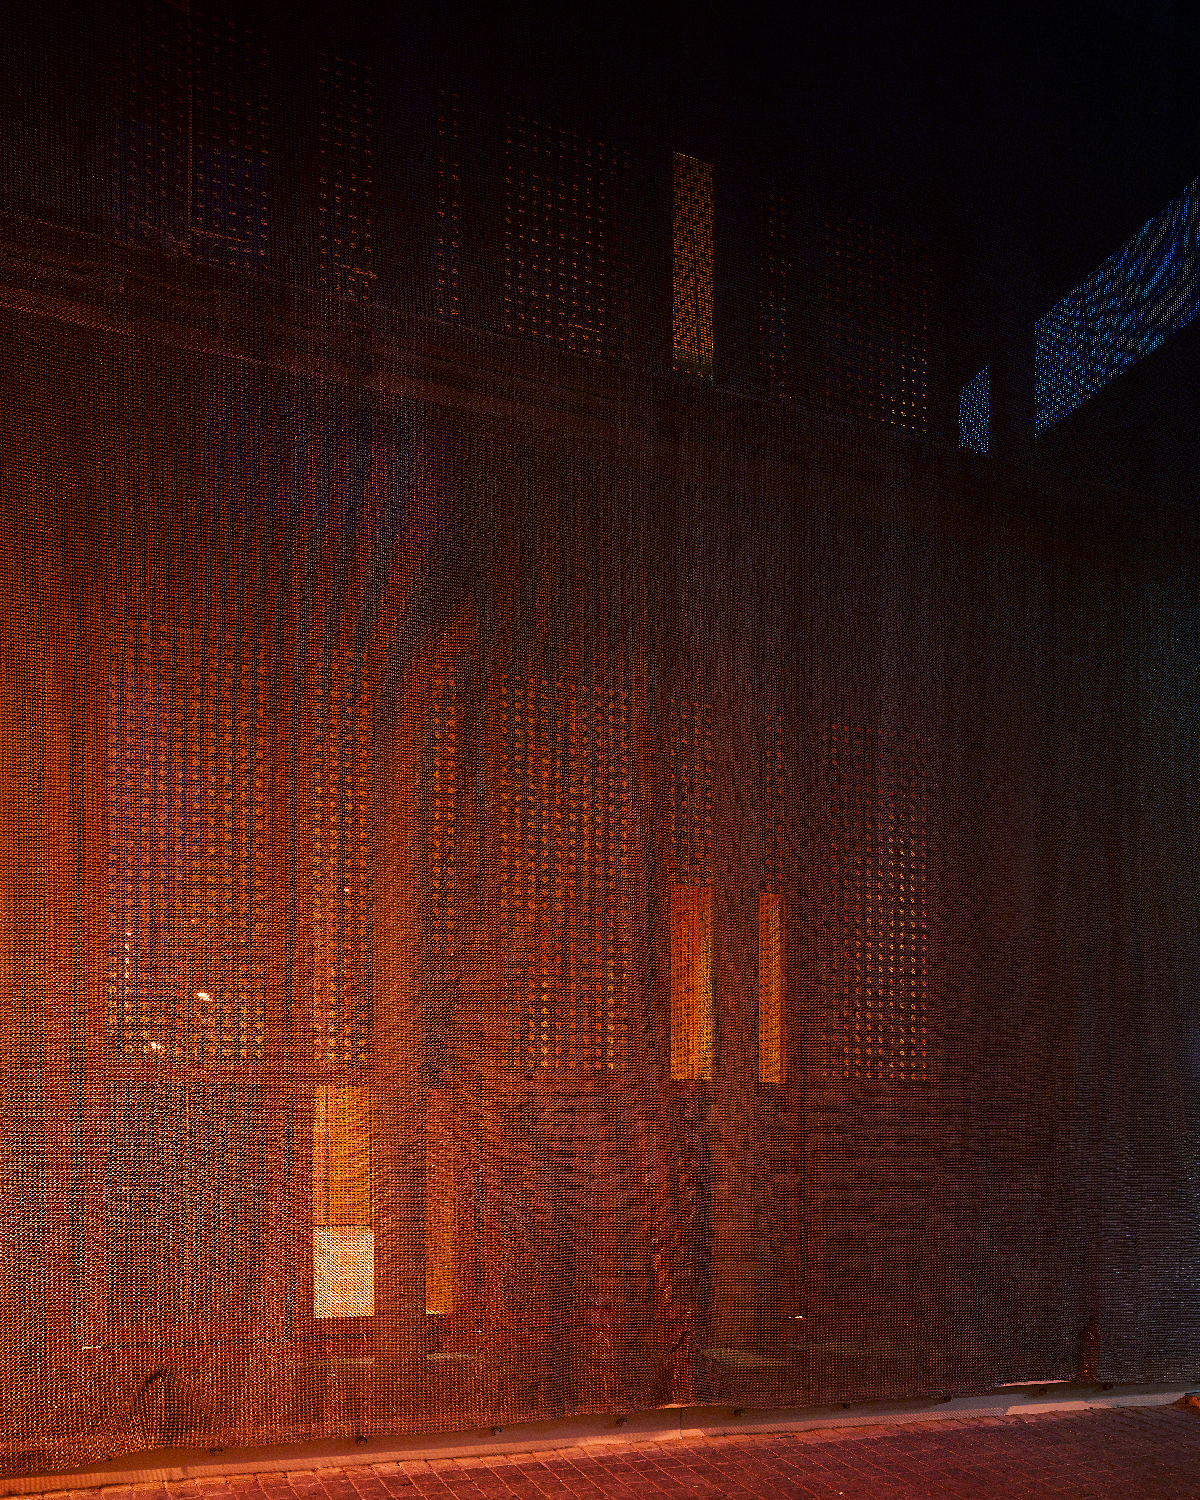 Abstract photograph of a mesh metal wall.